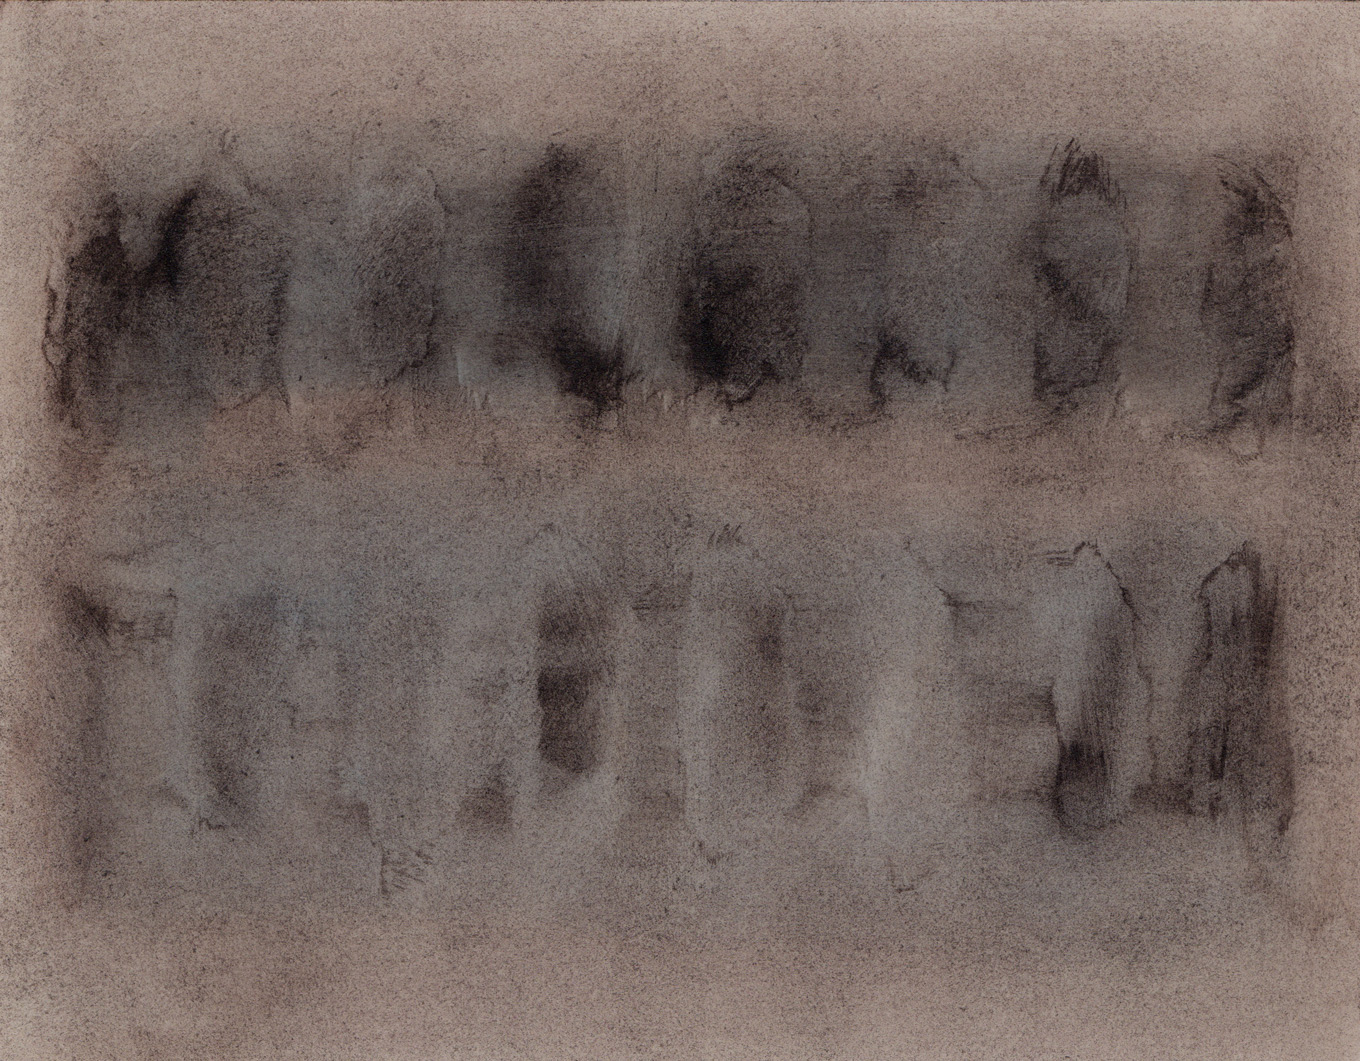 L1398 - Nicholas Herbert, British Artist, abstract painting, Residual Trace - Necropolis, 2022